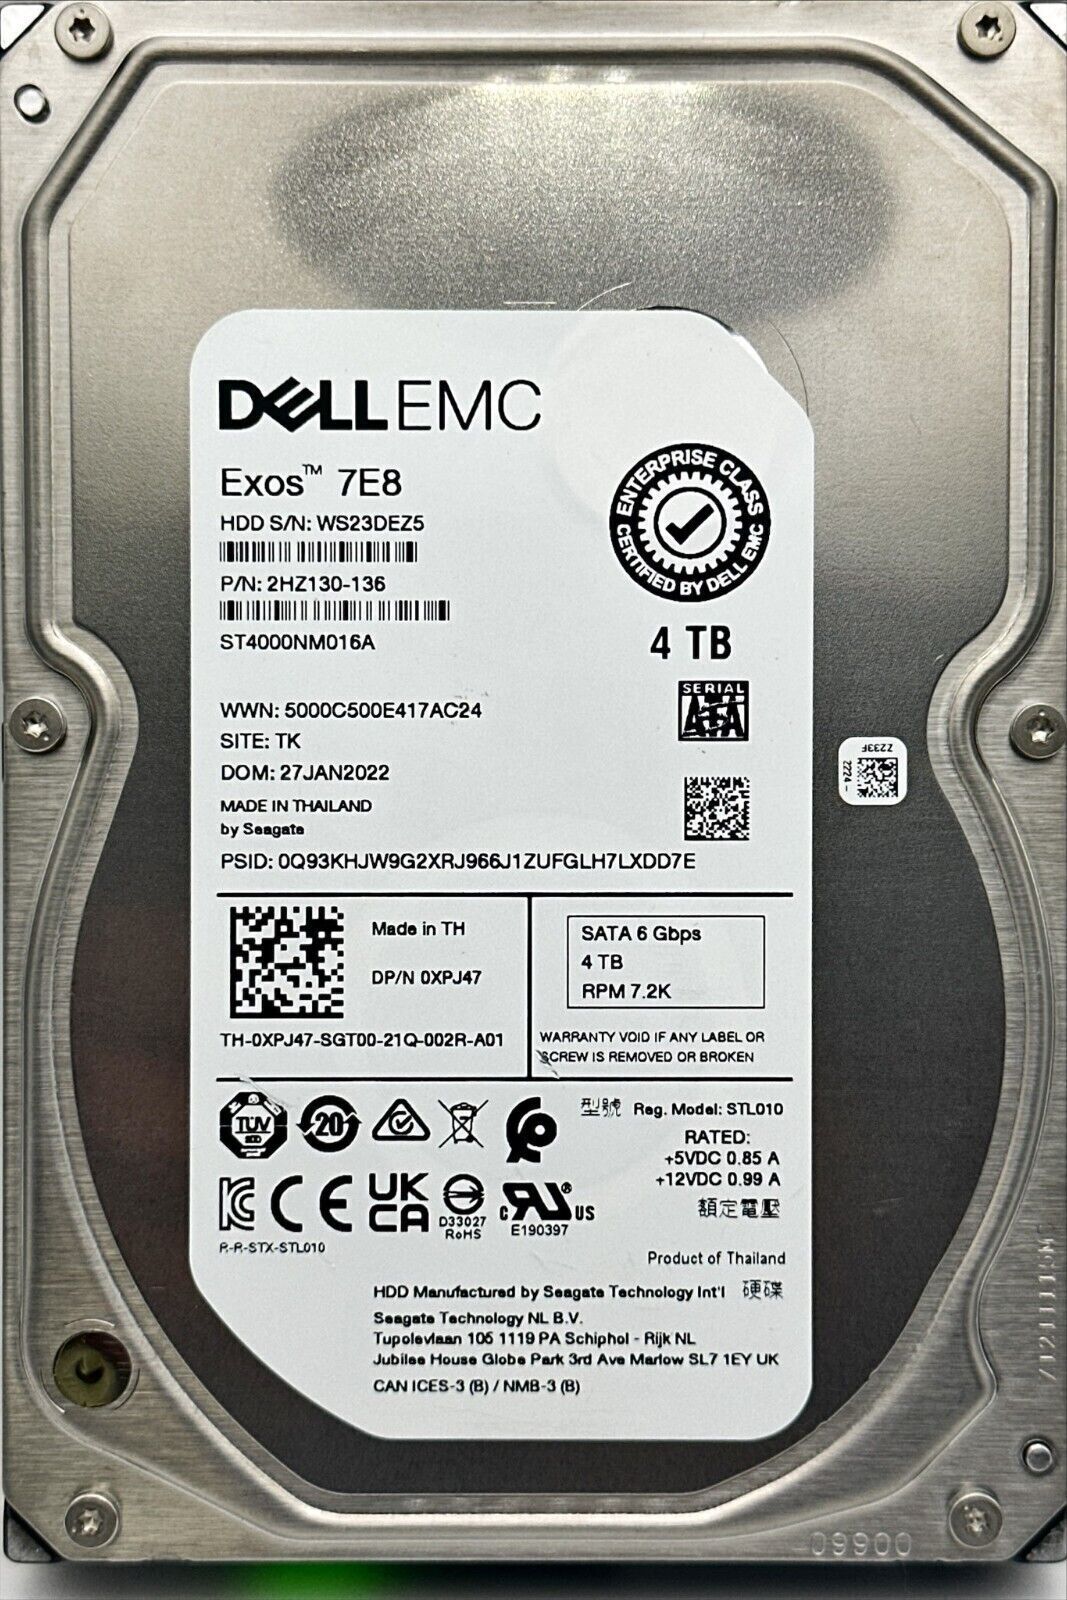 DELL EMC ST4000NM016A 4TB 3.5